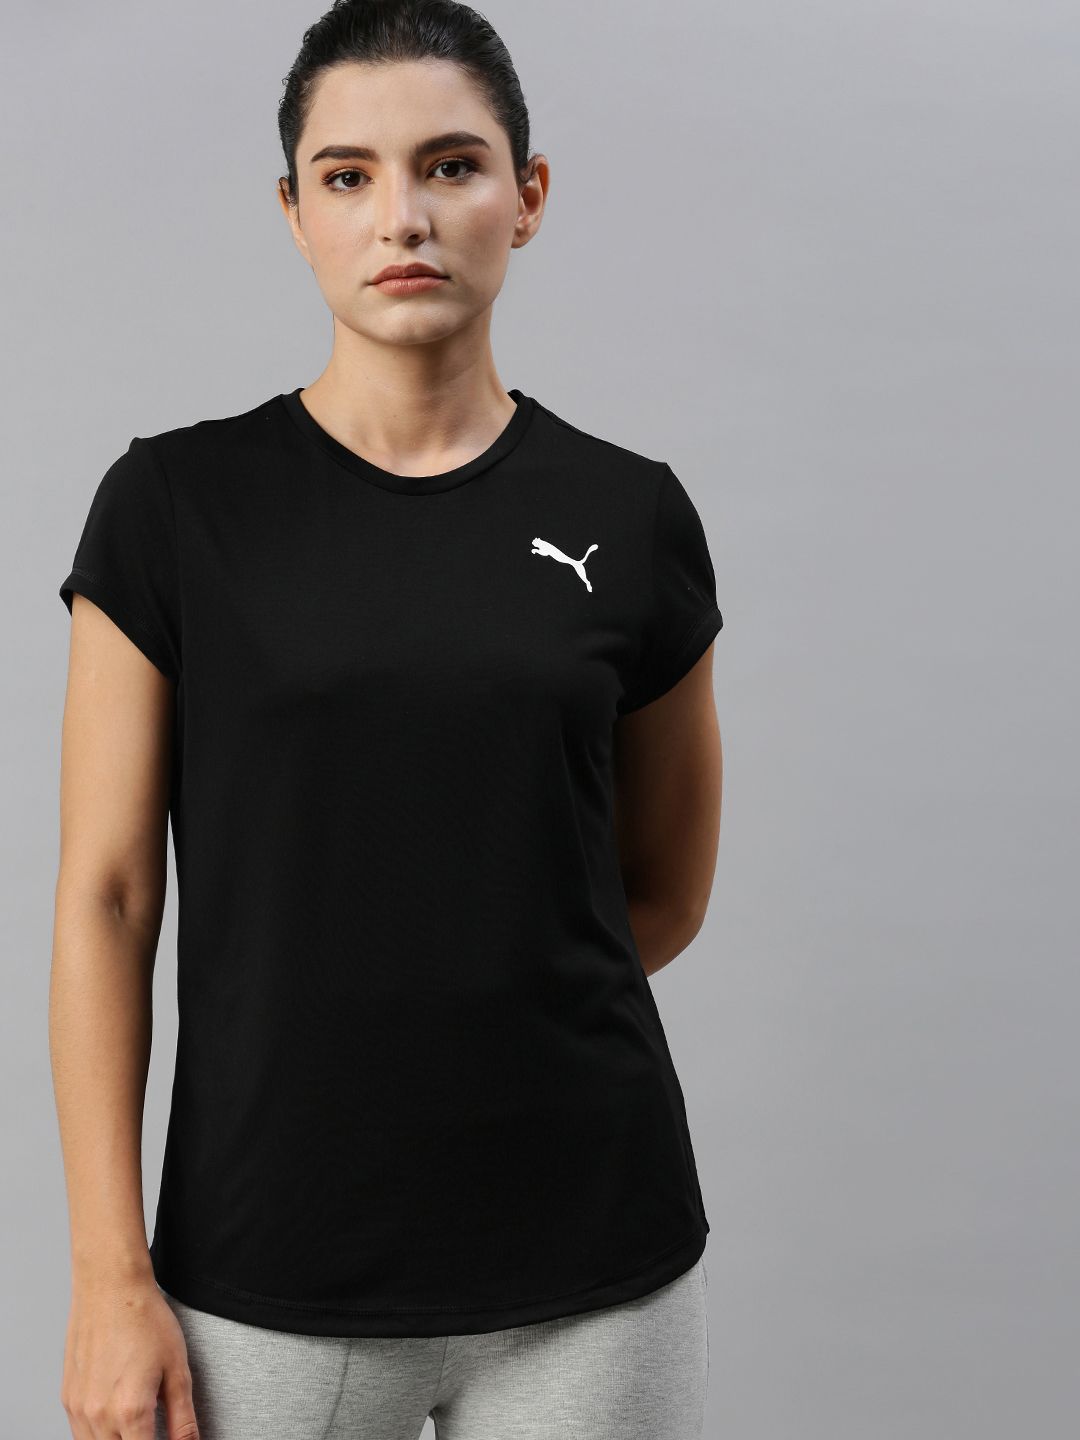 Puma Women Black Solid Round Neck Active T-shirt Price in India